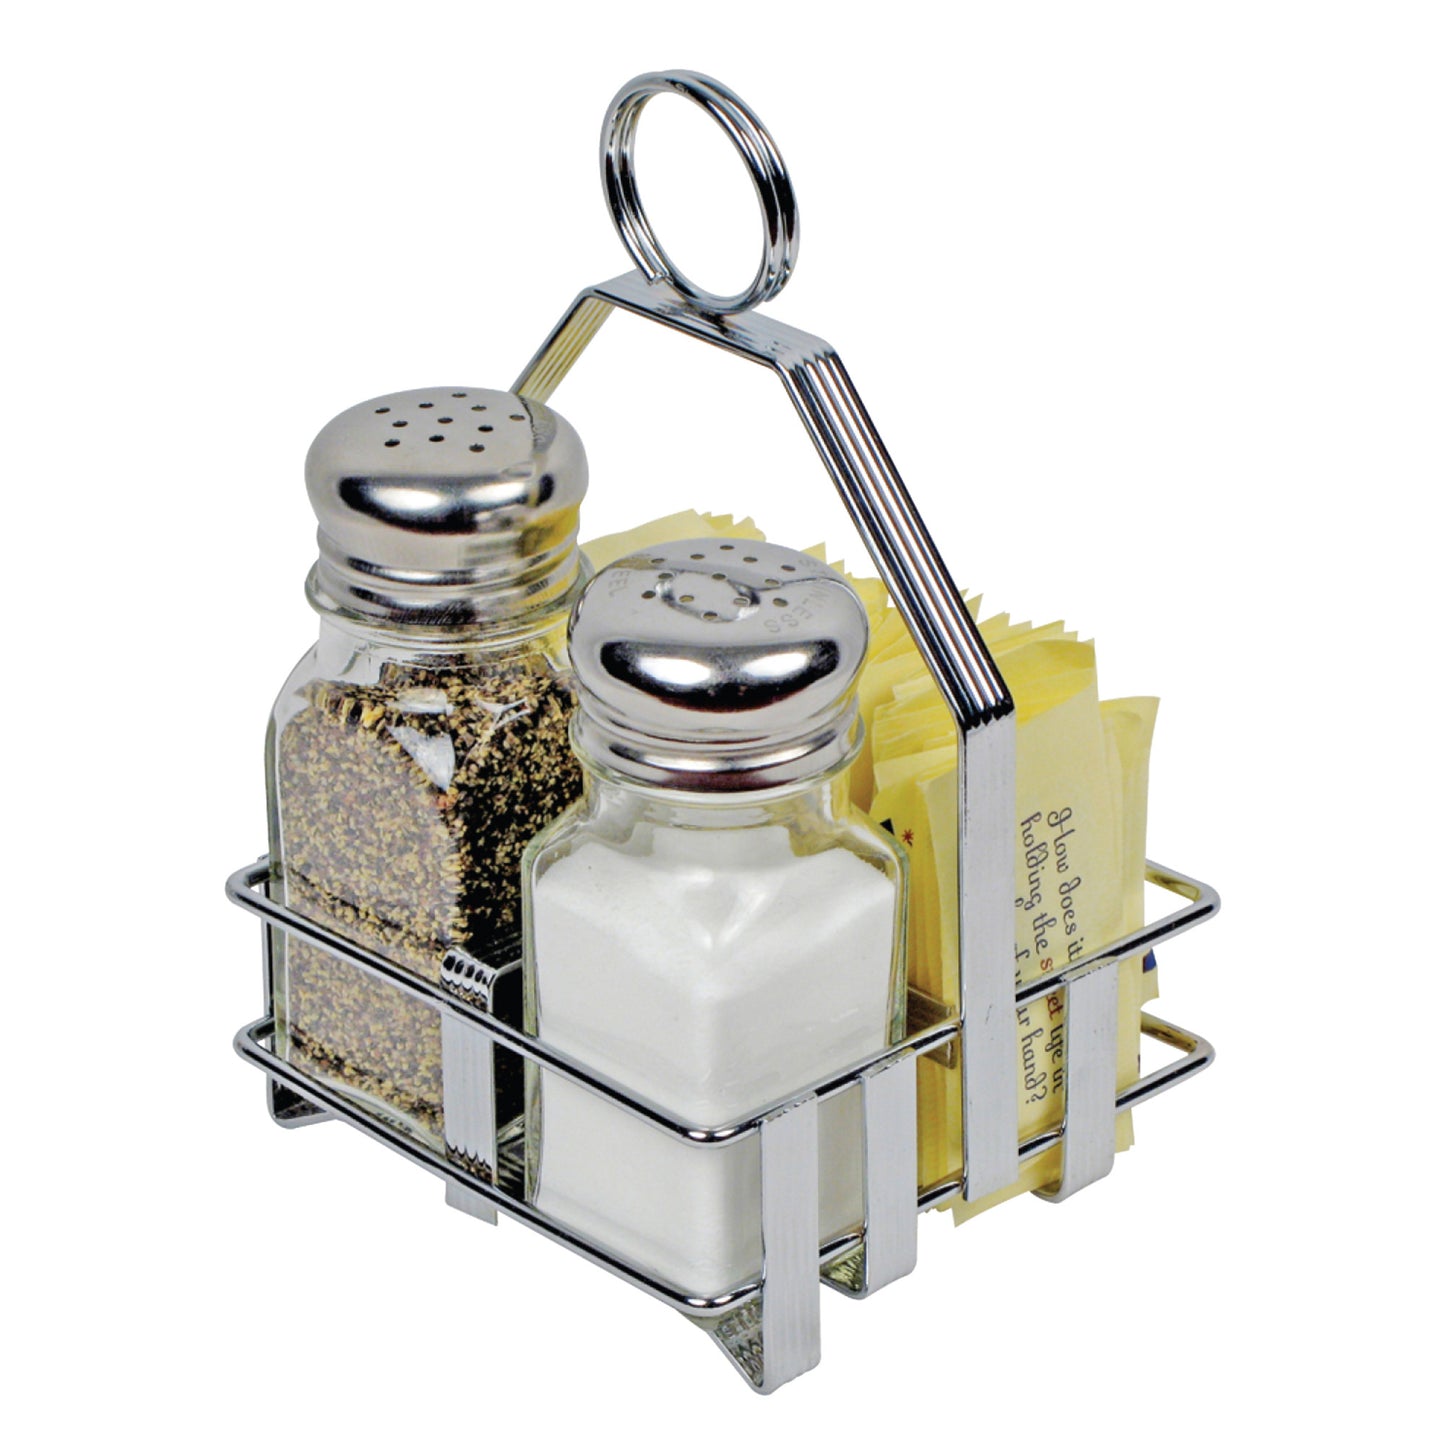 WH-7 - Chrome Plated Cruet Rack for Salt/Pepper Shaker &amp; Sugar Packets